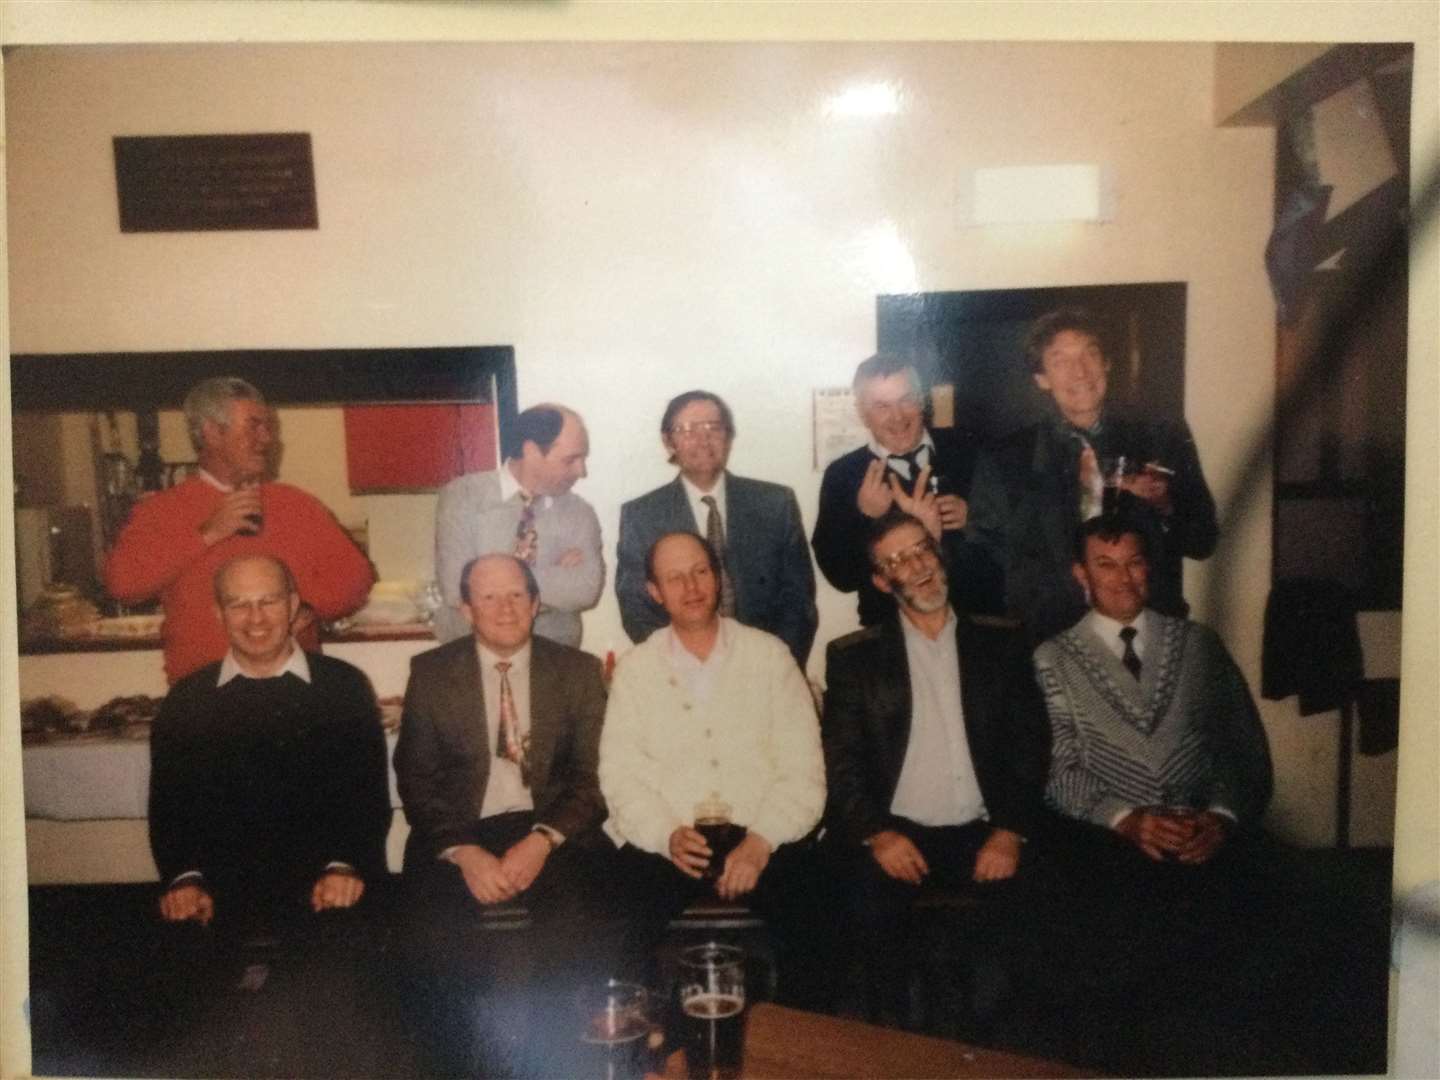 The 1993 reunion - back row from left: Dick Osenton, Terry Elliott, Pete Rogers, Barry Stevens, Paul Chandler; front row, from left: John Doggett, Ian Jackson,Terry Hoare, Trevor Woodhouse, Ted Leftley